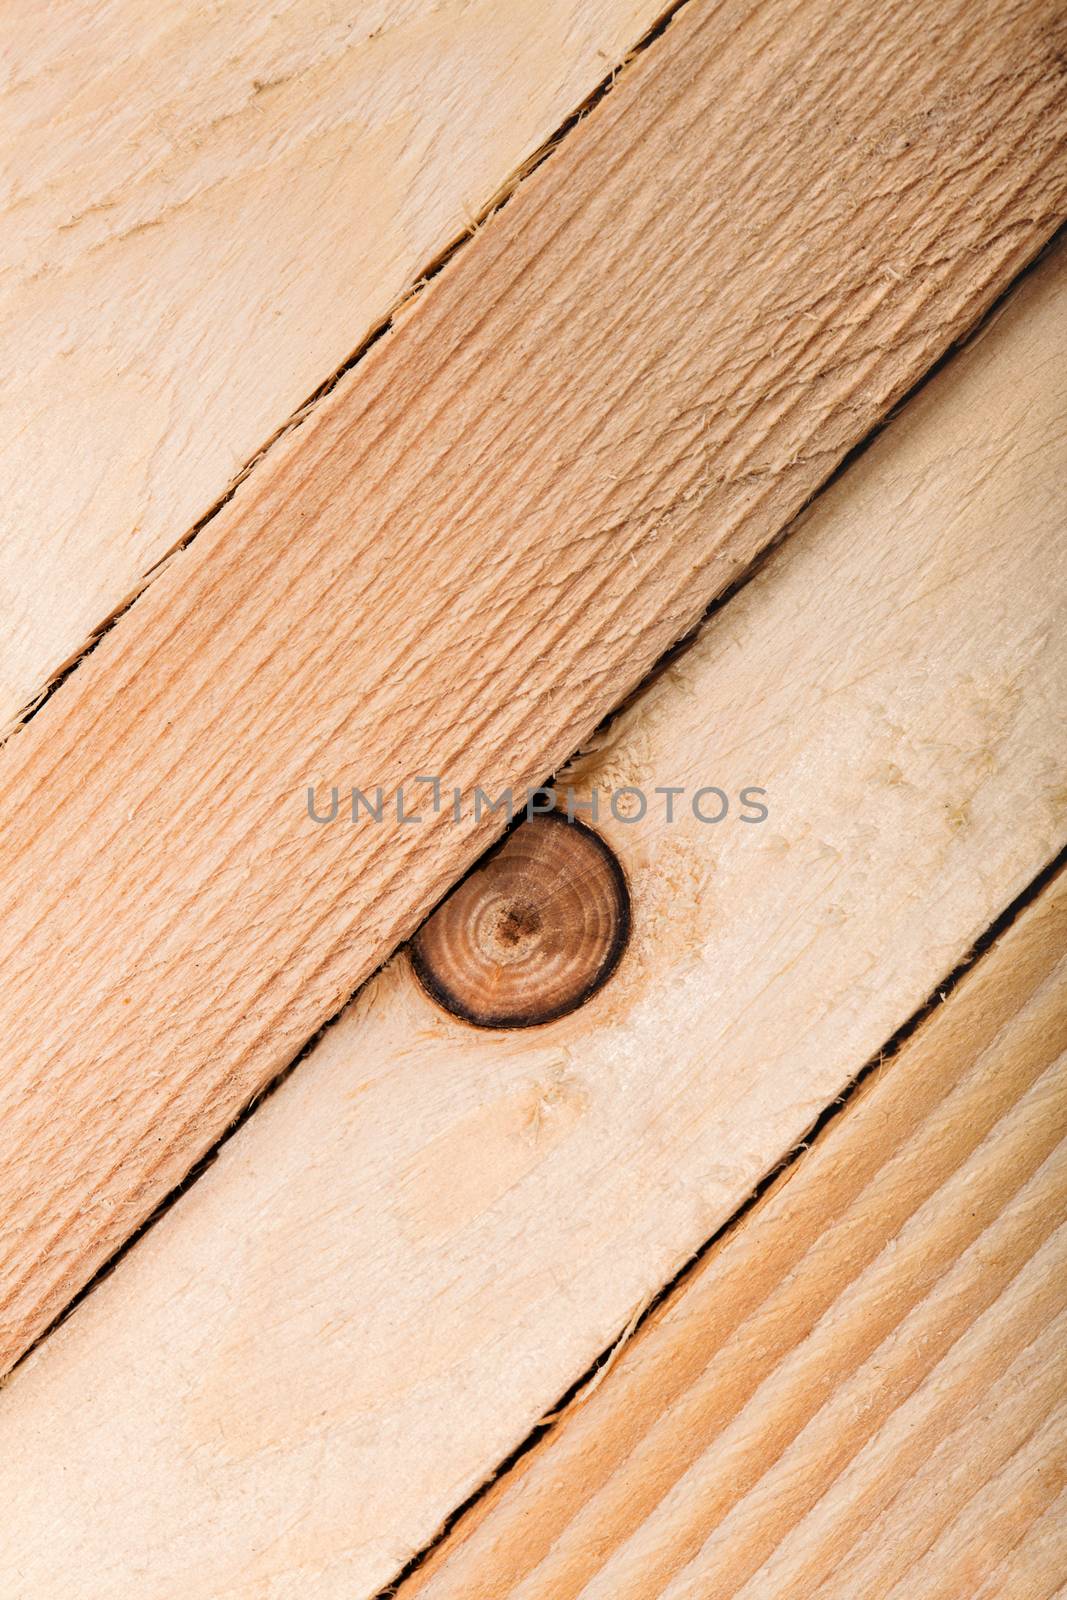 four wooden beams, close up abstract shot